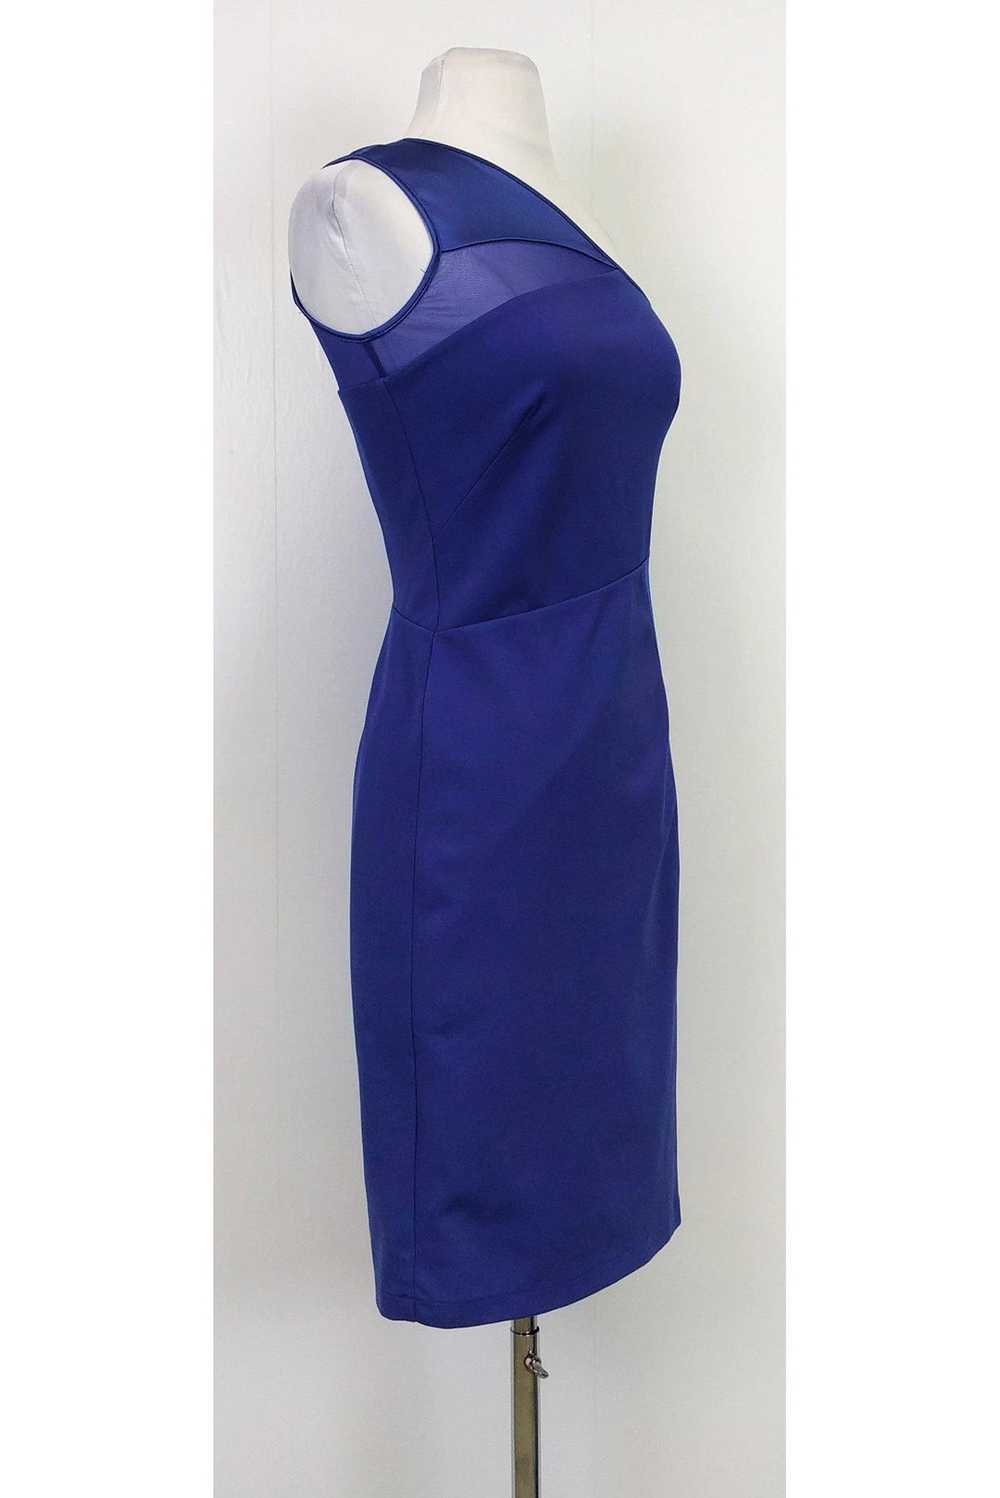 Halston Heritage - Purple One Shoulder Dress Sz XS - image 2